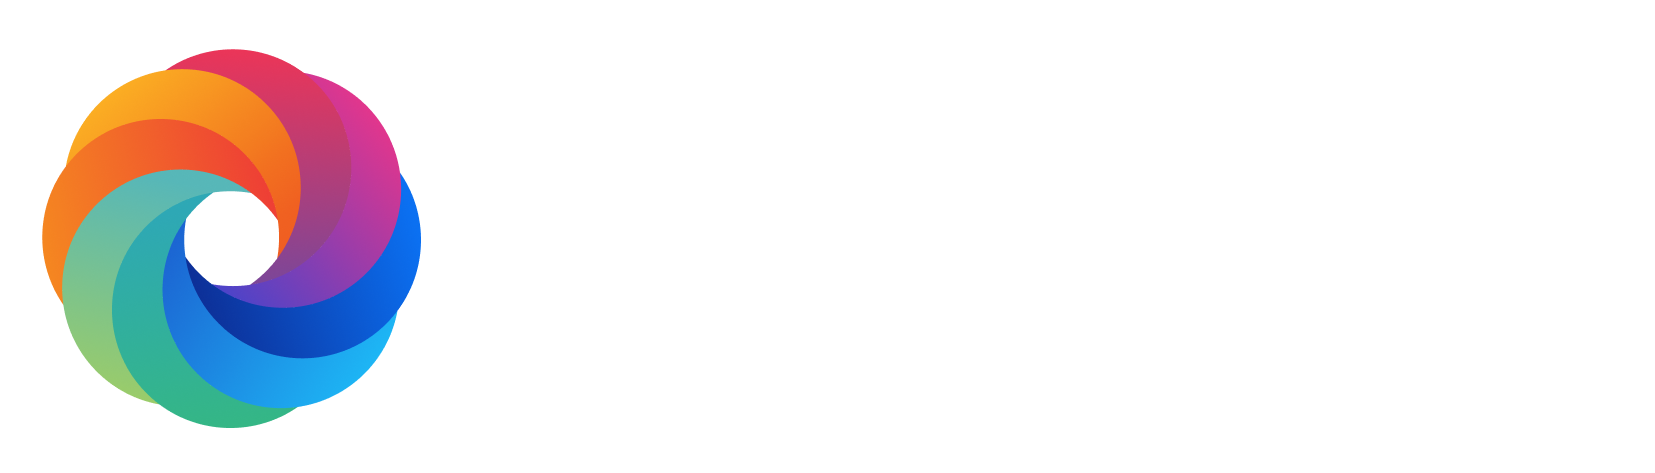 aichina123